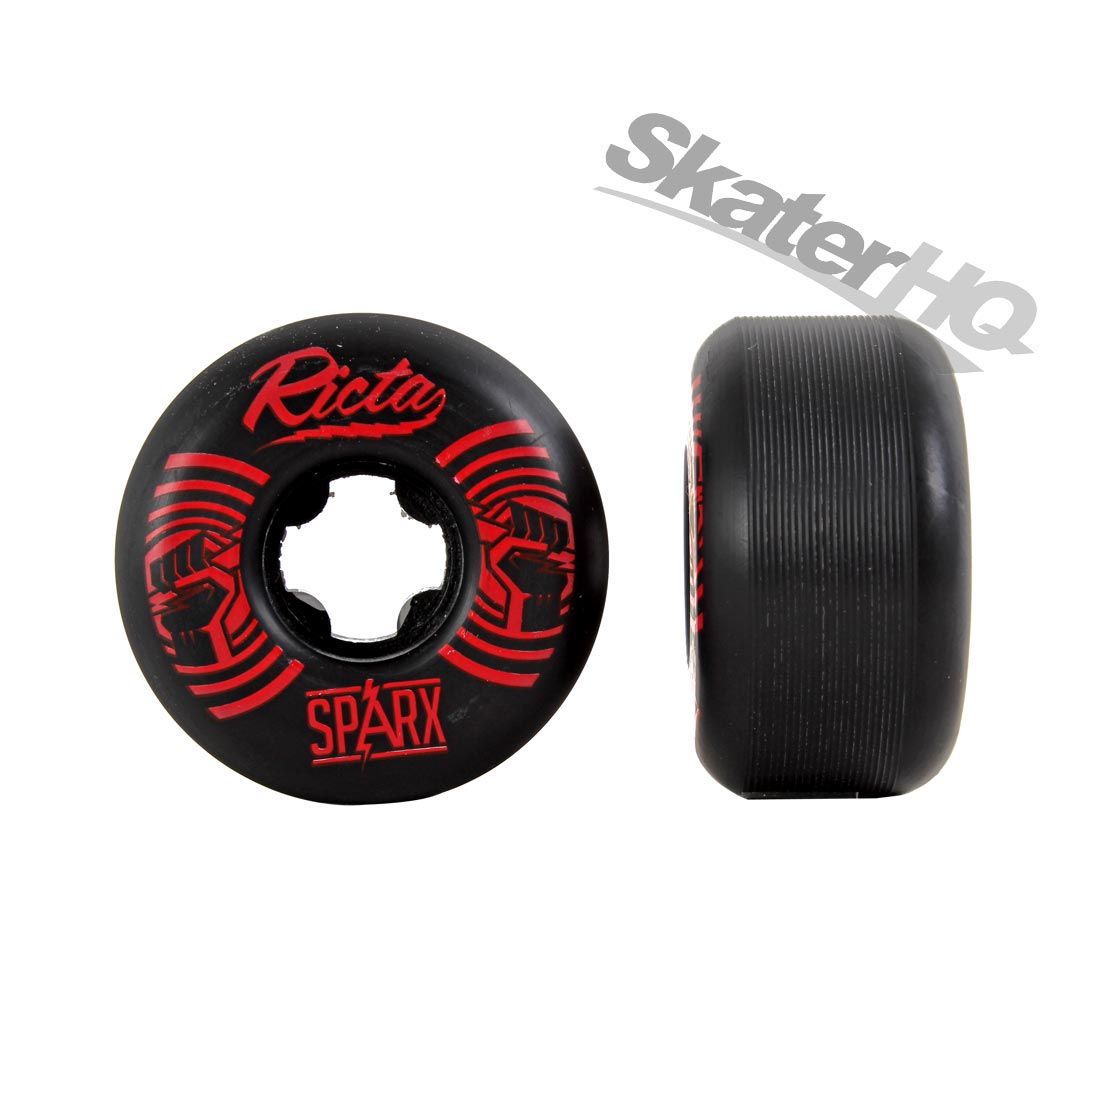 Ricta Sparx Shockwaves 53mm Black Skateboard Wheels